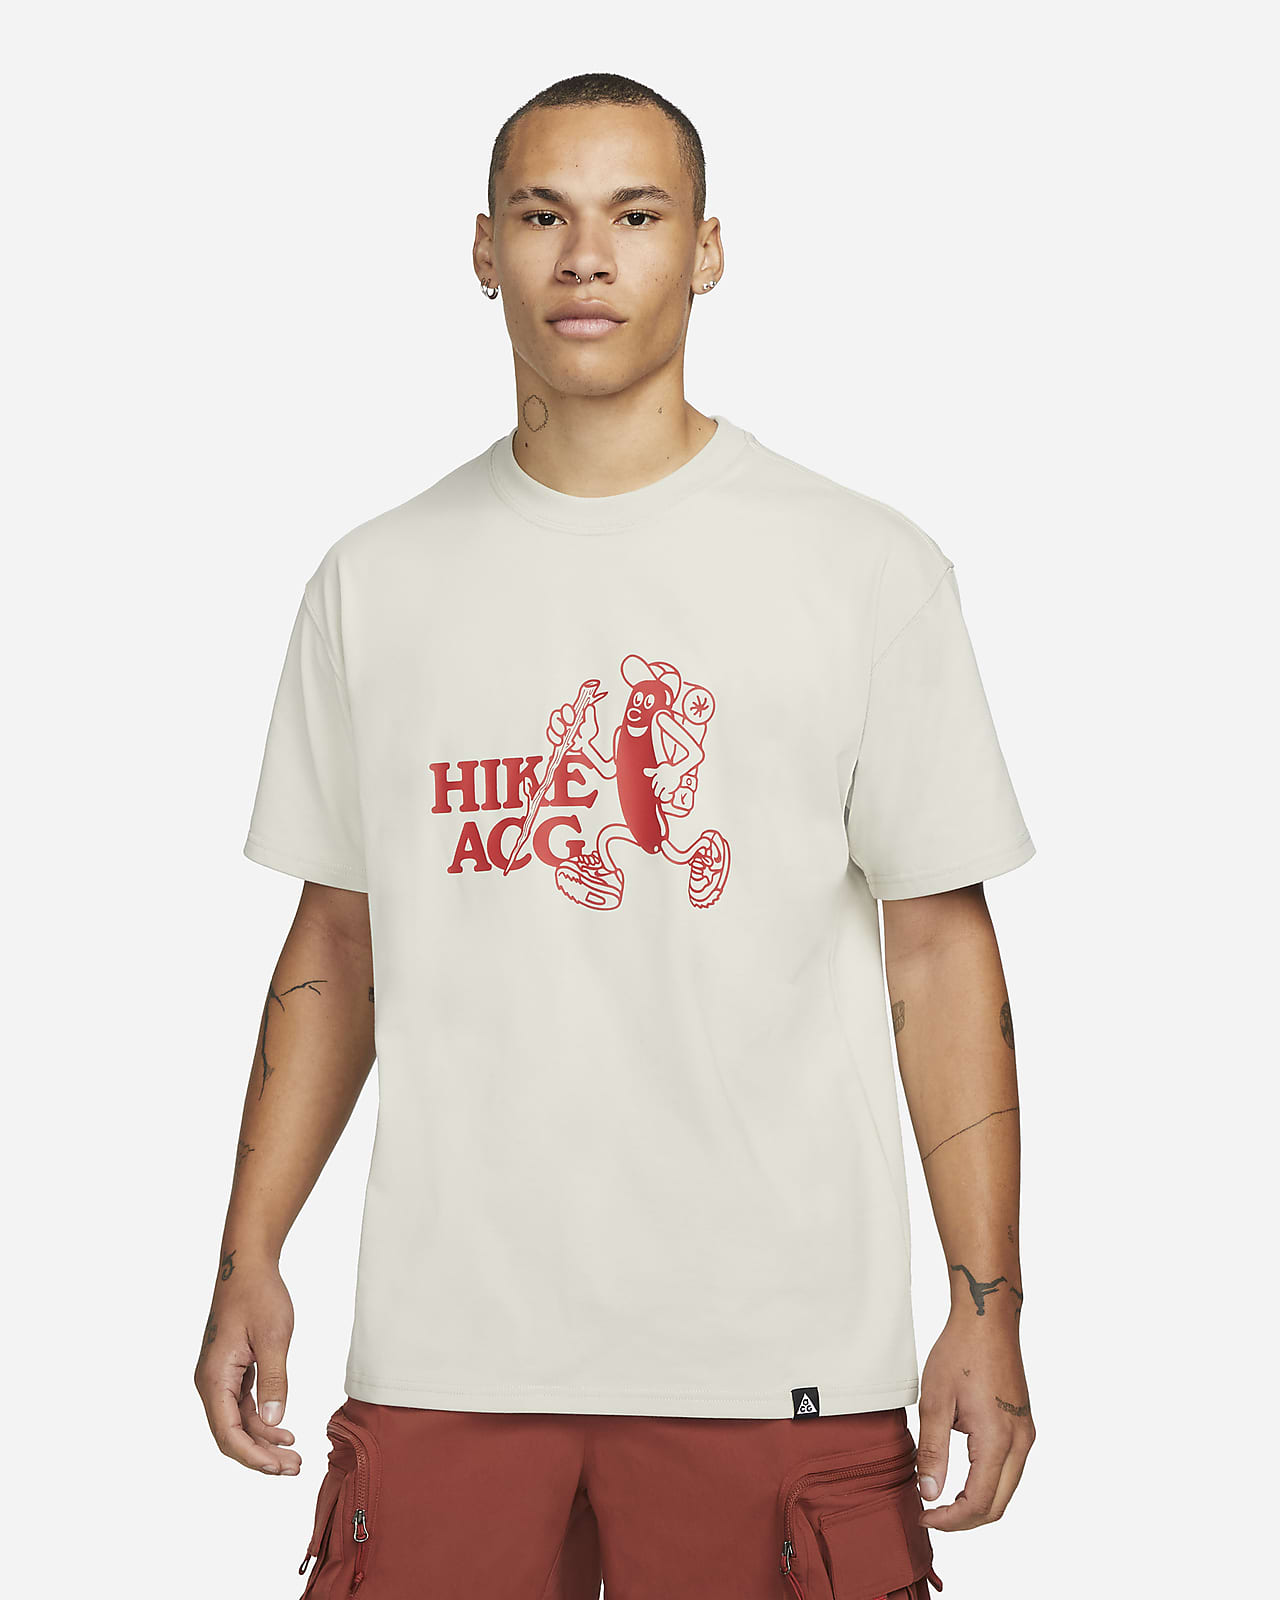 Nike ACG "Hike" Men's T-Shirt